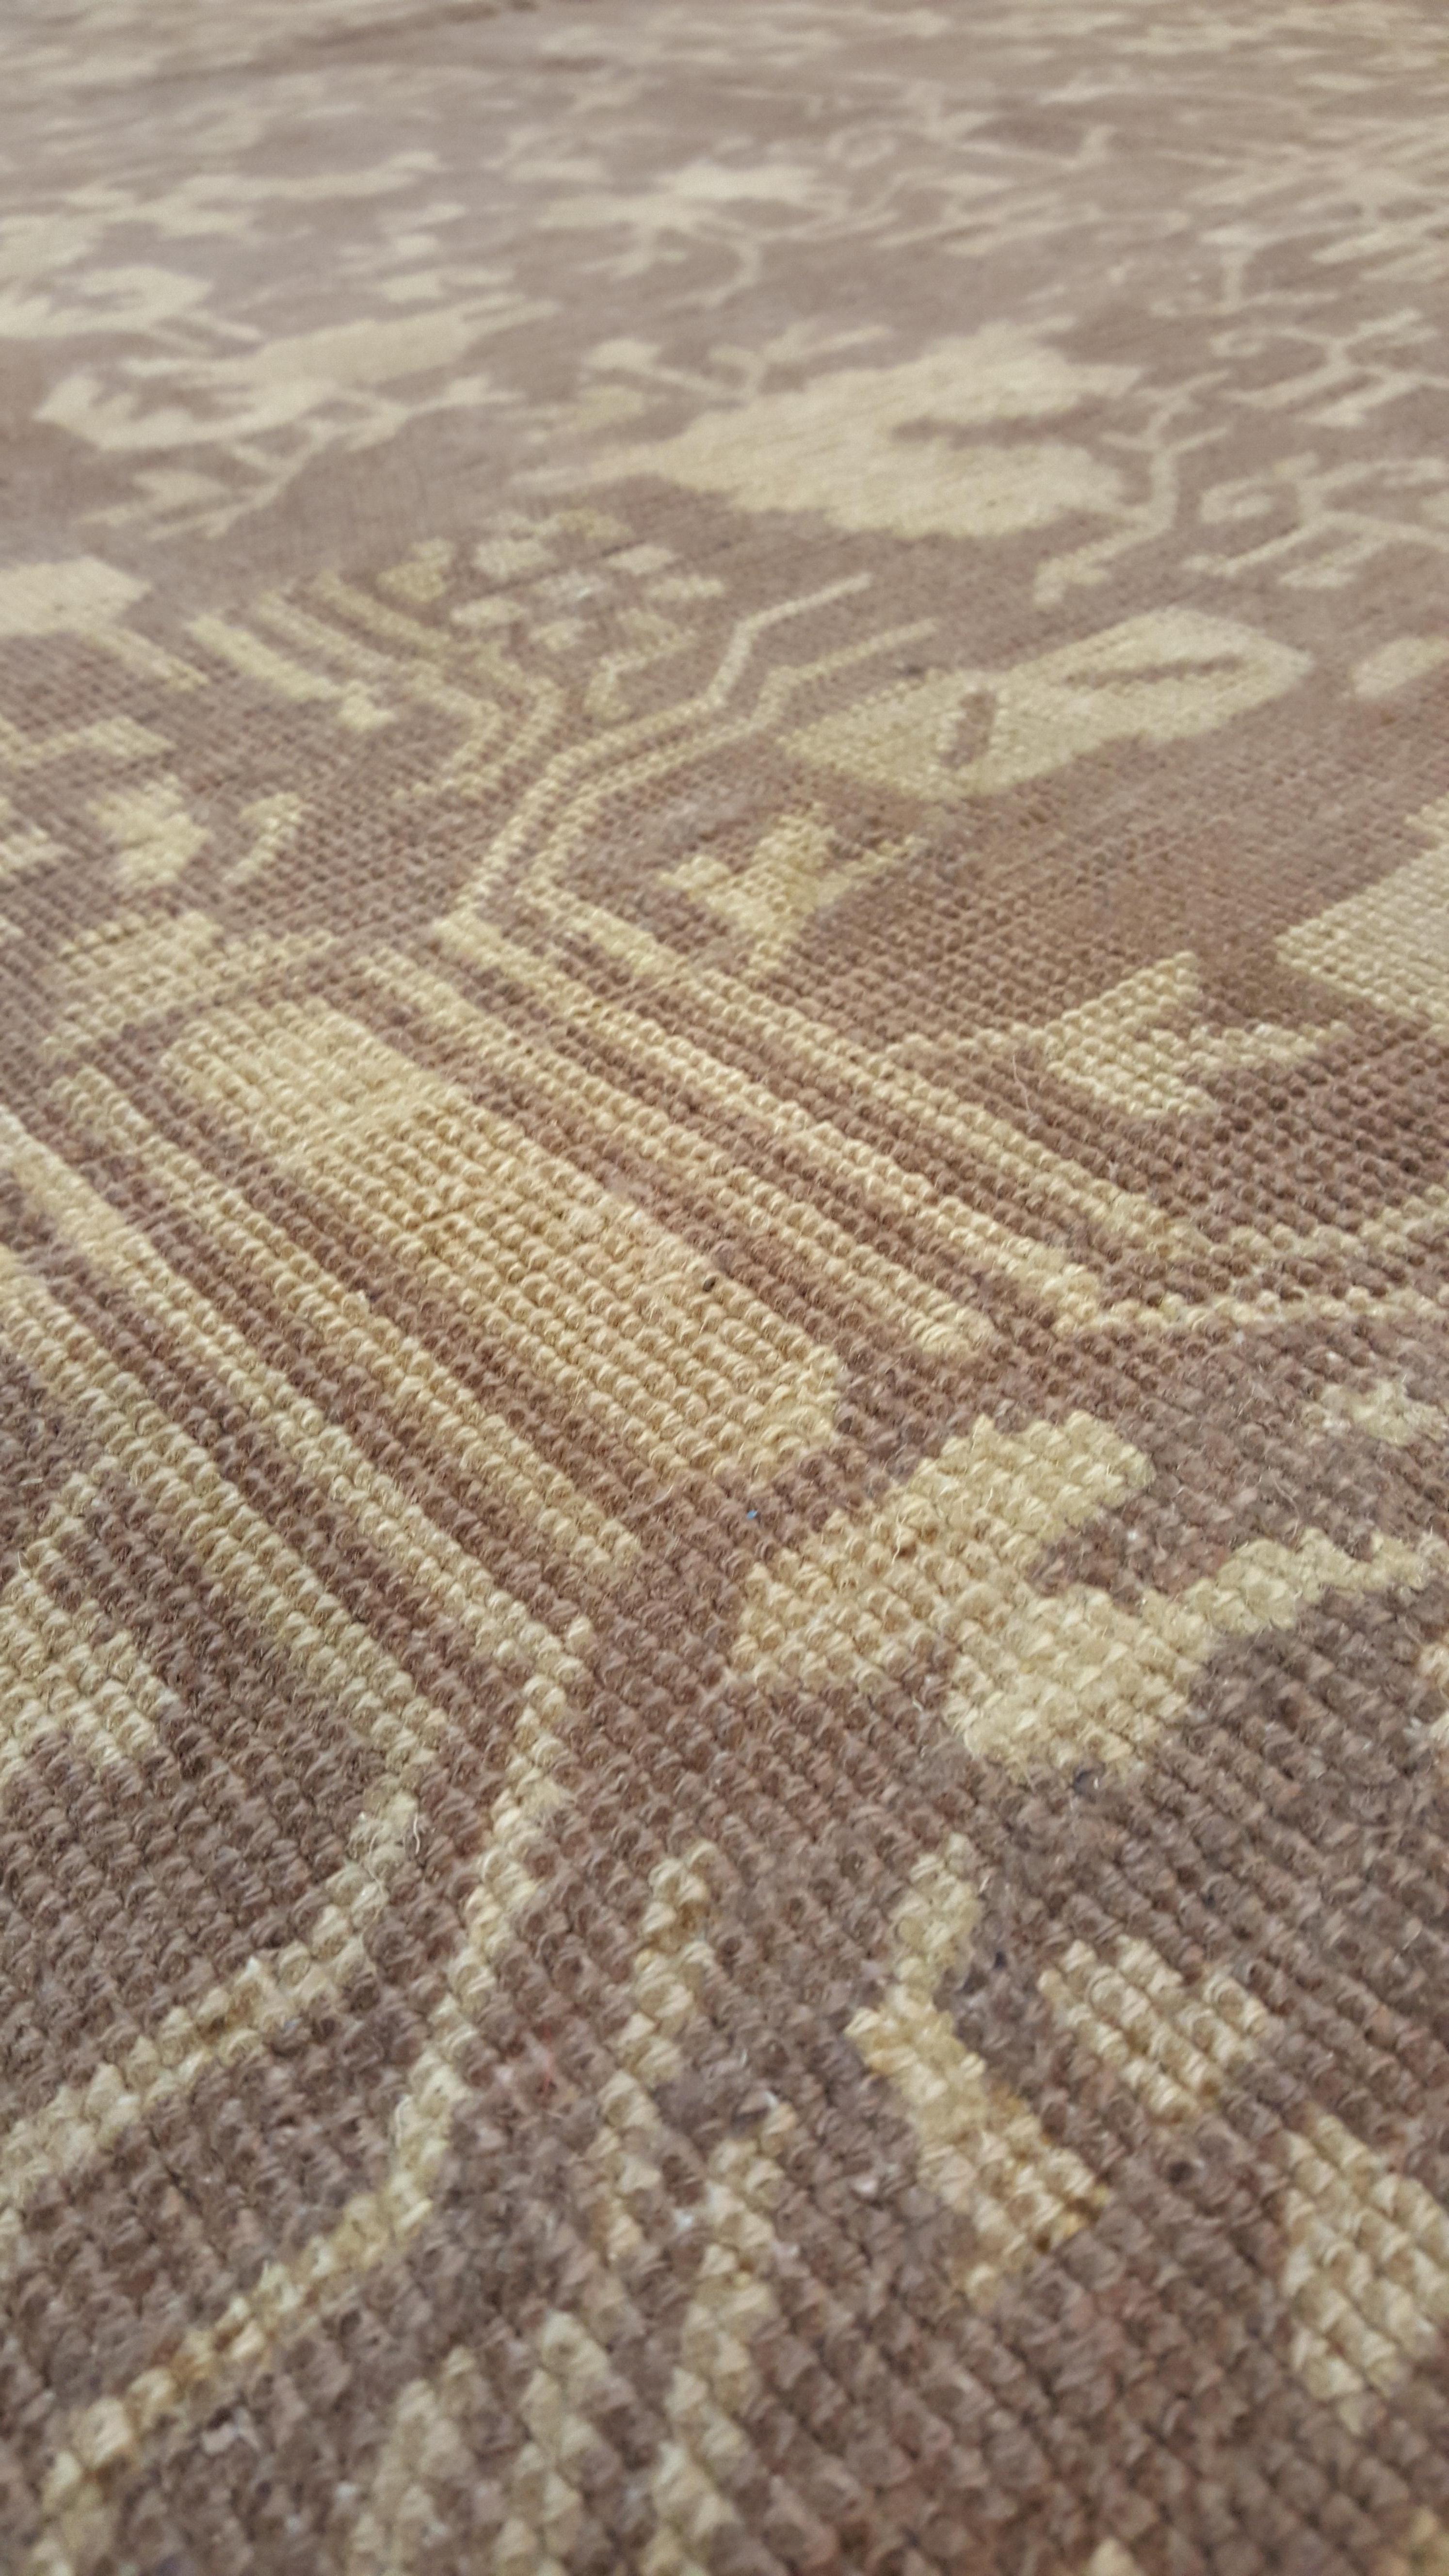 Chinese Export Antique Chinese Carpet, Handmade Oriental Rug, Brown, Gold, Cream, Beige